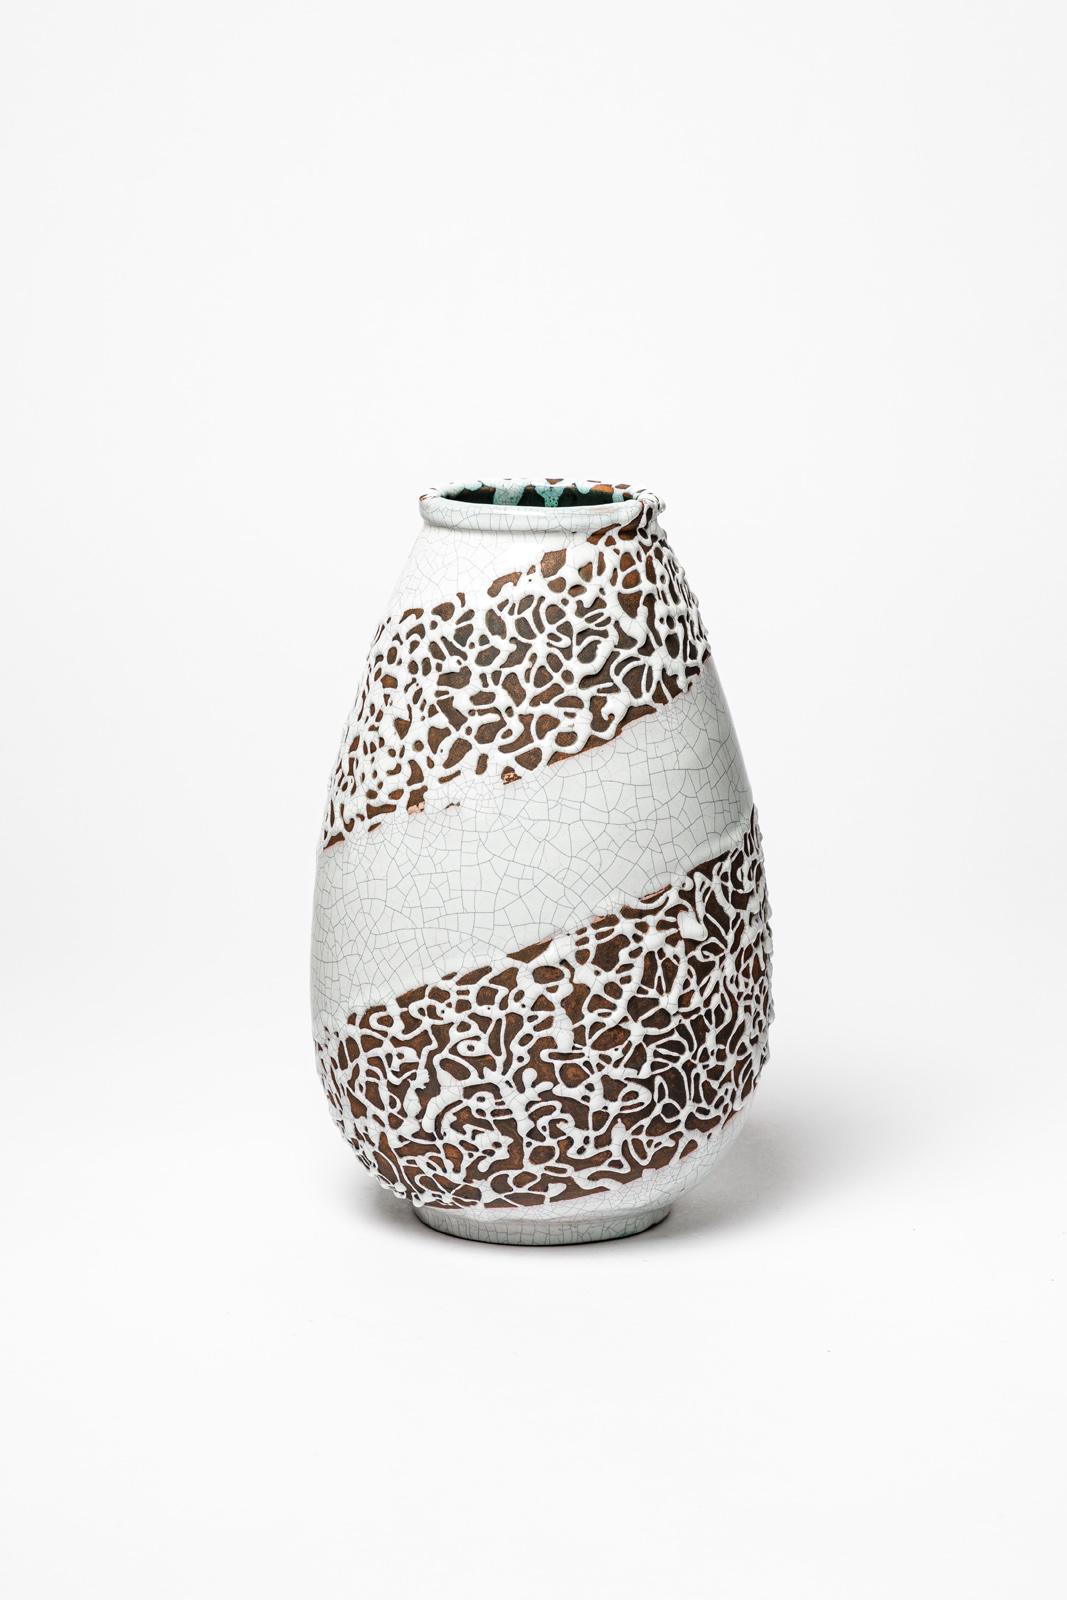 French Art deco 20th century white and black ceramic vase by Primavera CAB Felix Gete For Sale